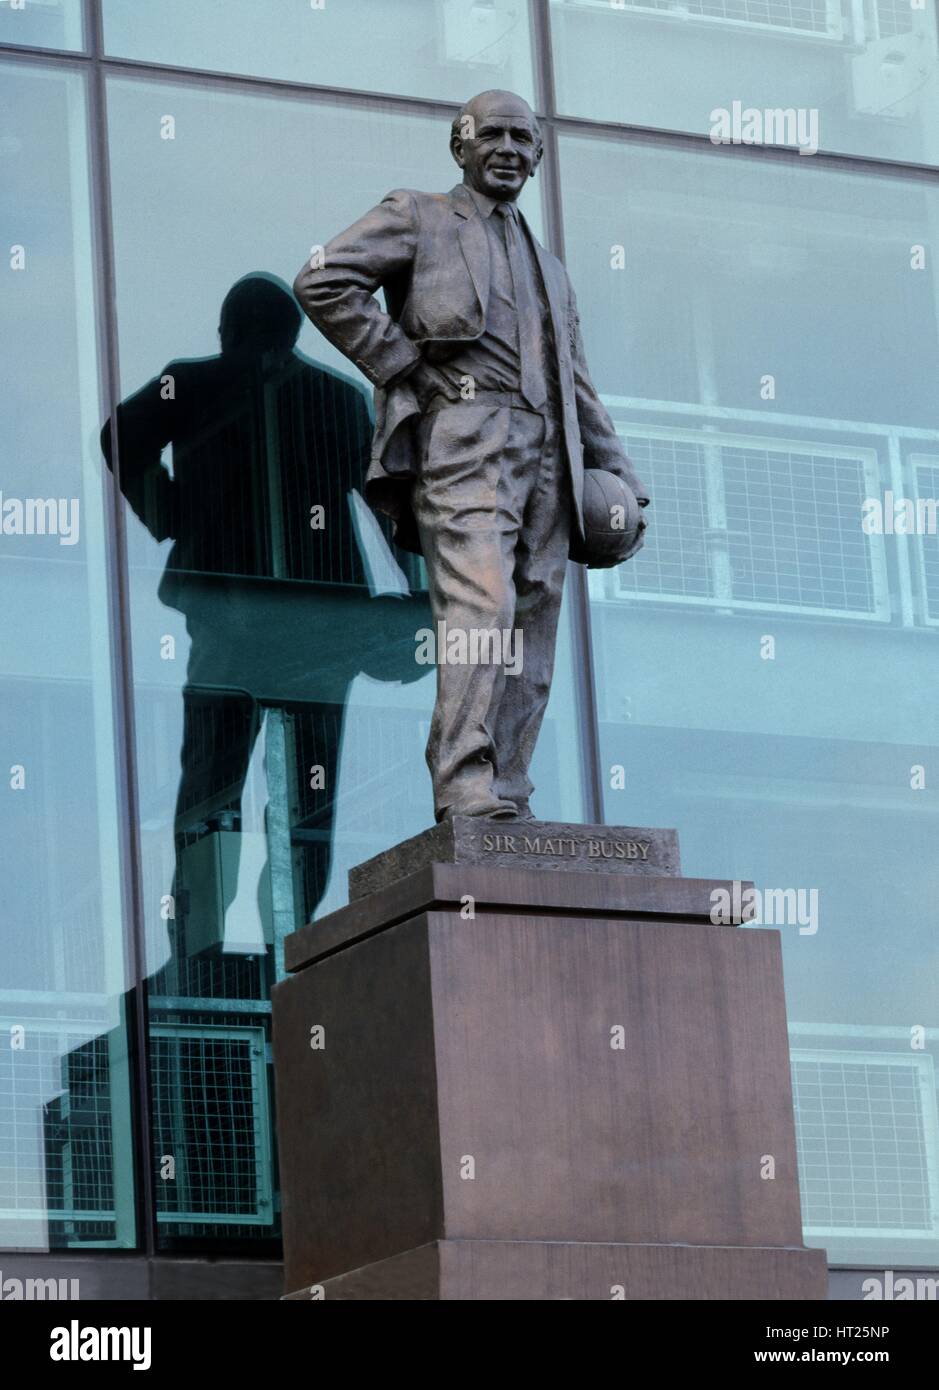 Statue of Sir Matt Busby outside Old Trafford football stadium, Manchester, c2000s. Artist: Historic England Staff Photographer. Stock Photo